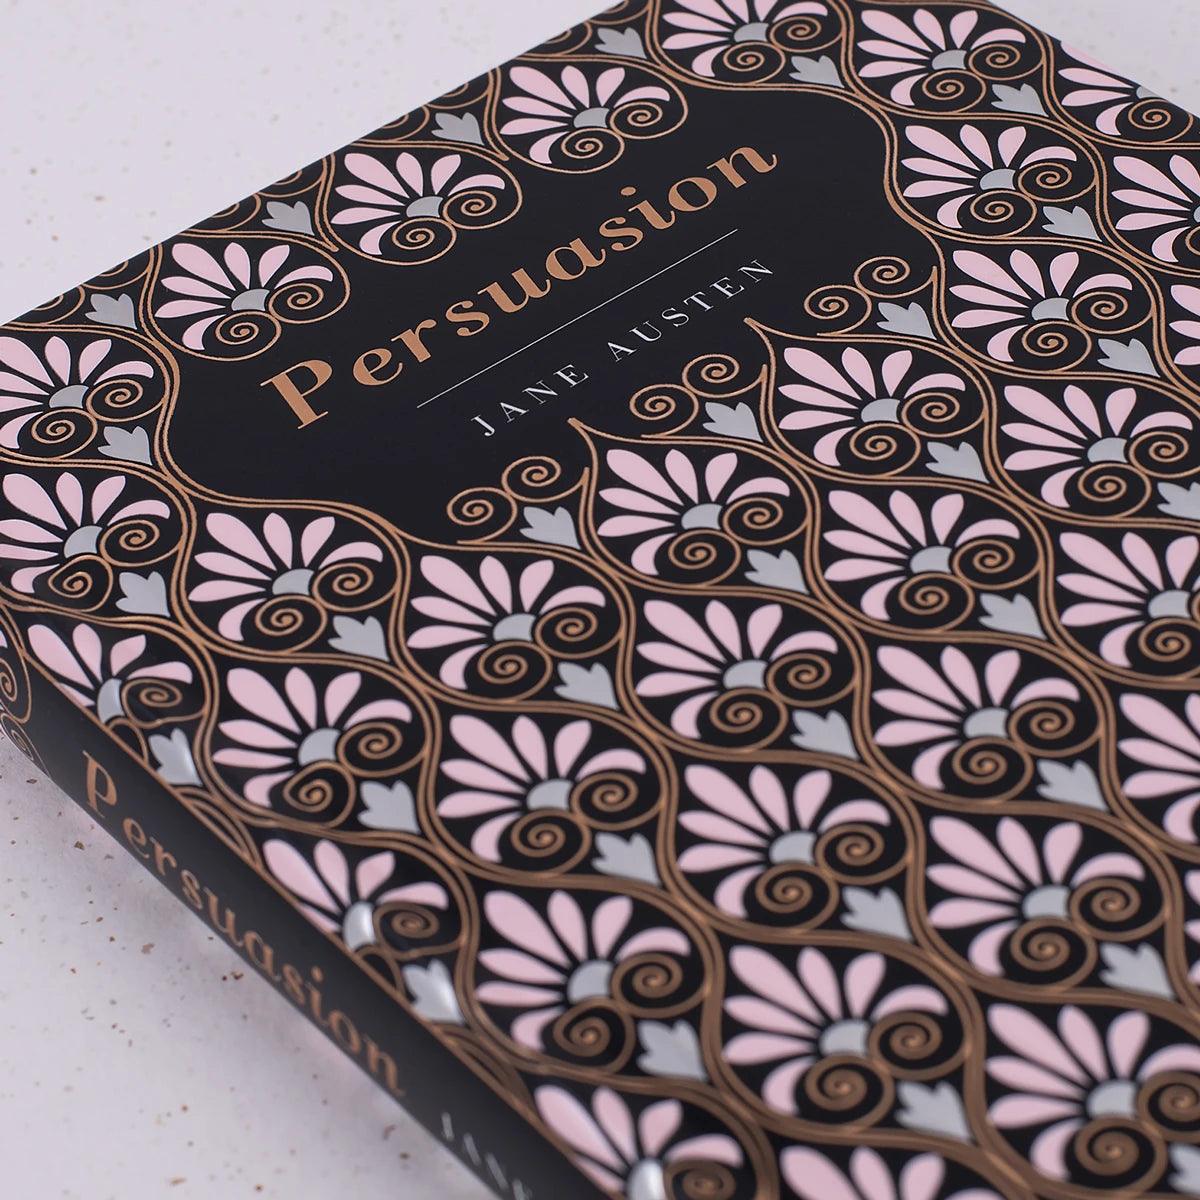 Persuasion - Luxury Hardback Edition - JaneAusten.co.uk